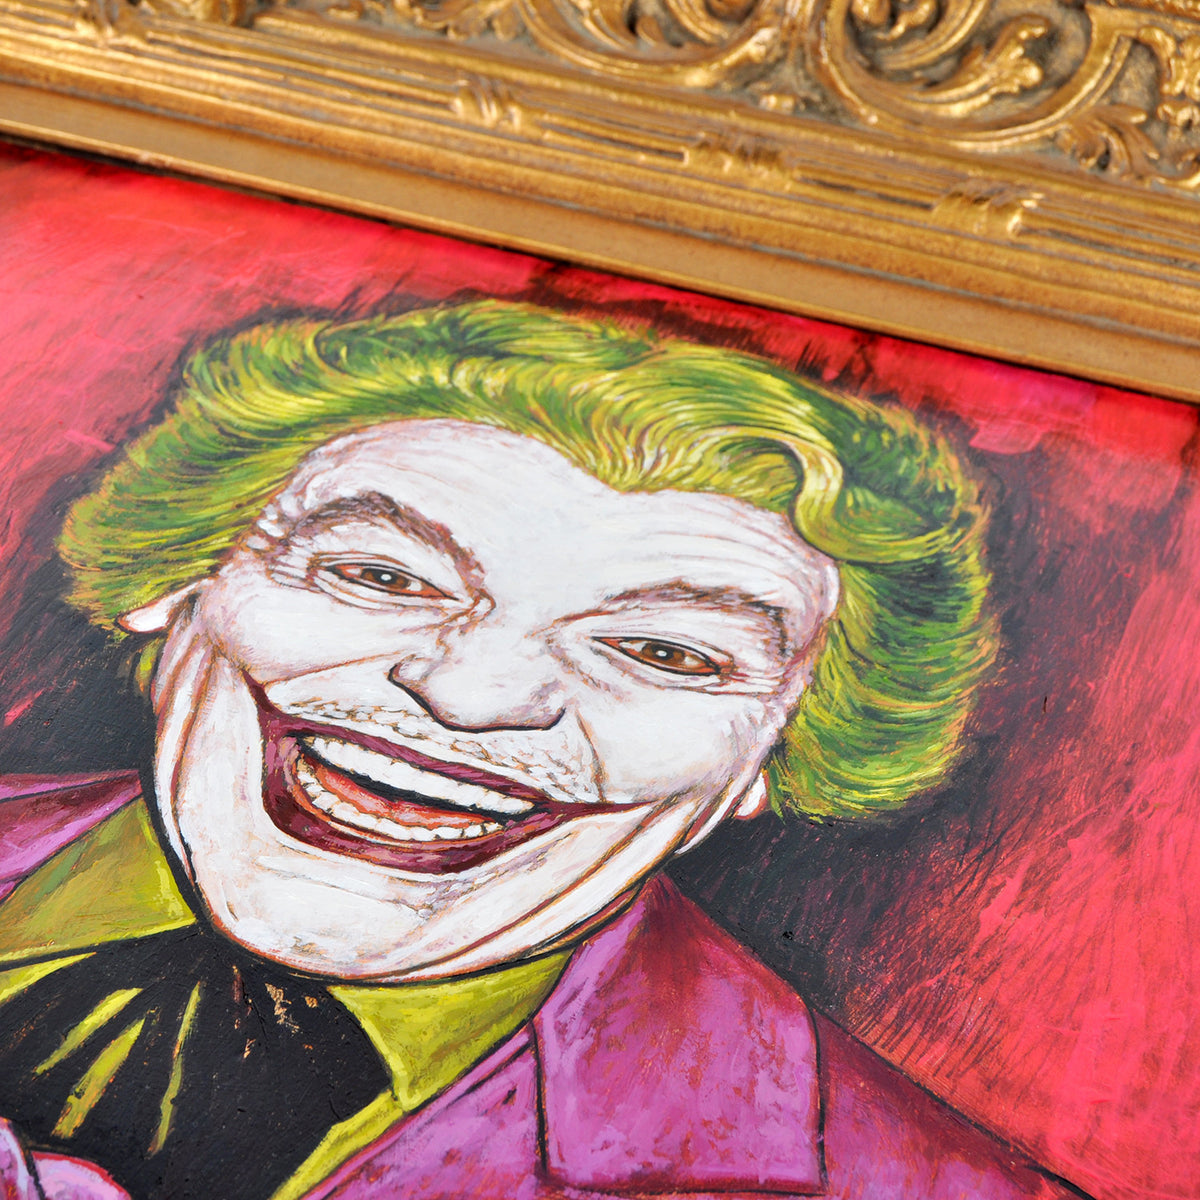 Andrew Houle &quot;The Joker - Cesar Romero&quot; - Original Oil Painting on Wood in Frame